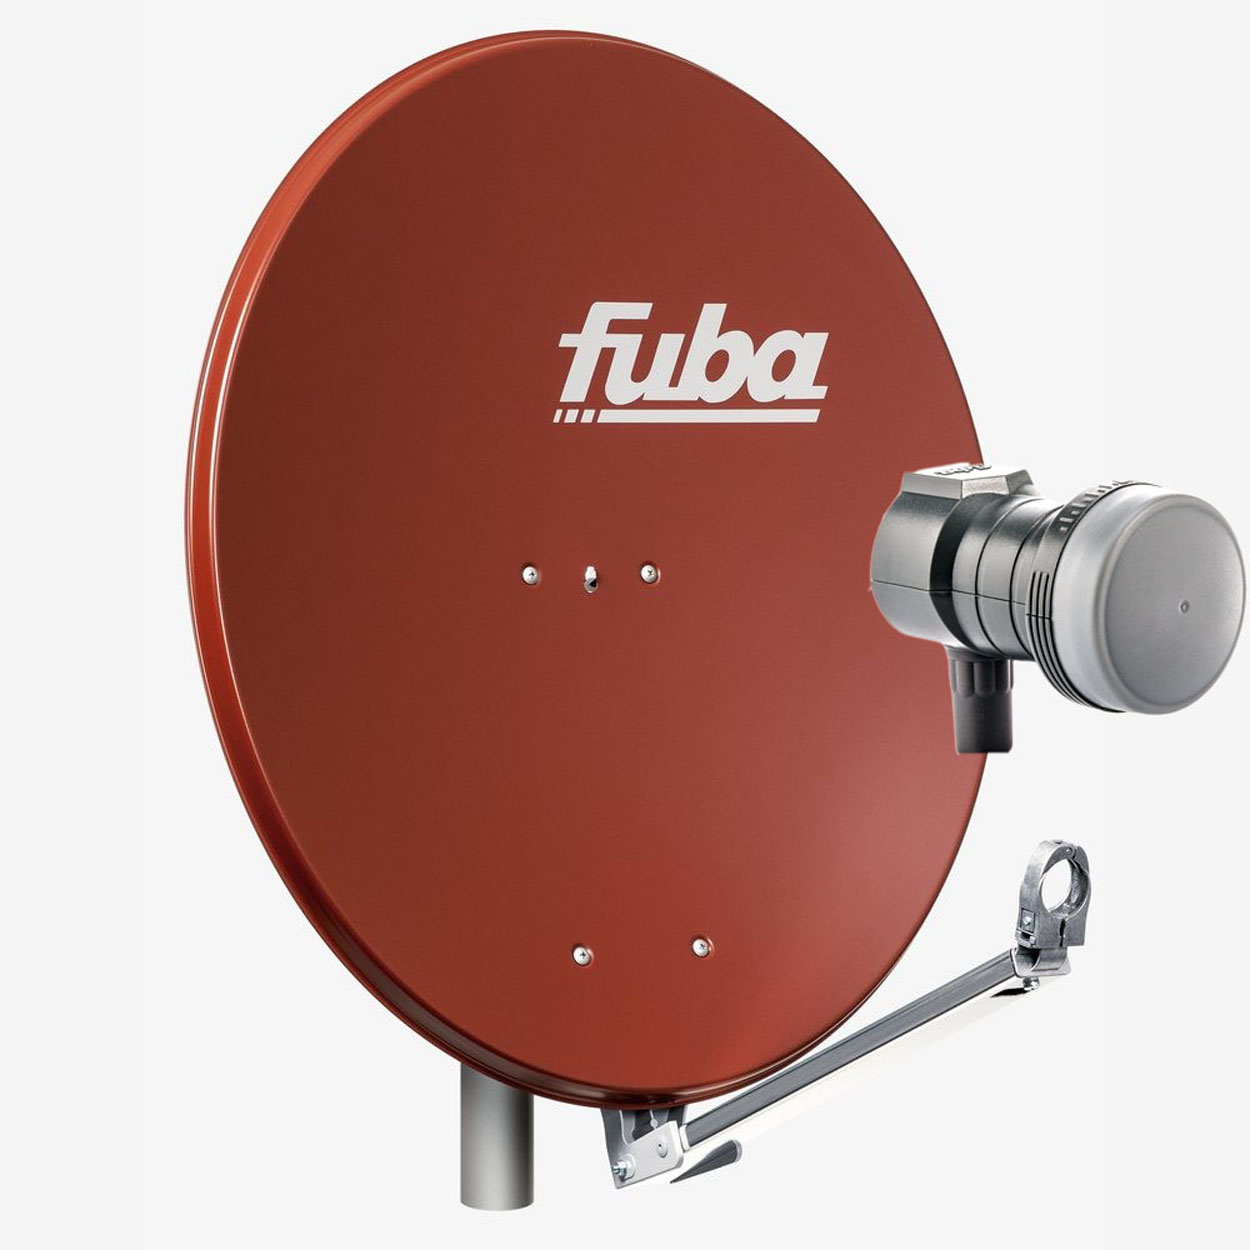 FUBA DAL 801 R Sat 117 cm, Single Schüssel Single LNB) (80 Anlage Antenne Sat Spiegel DEK Teilnehmer Anlage 1